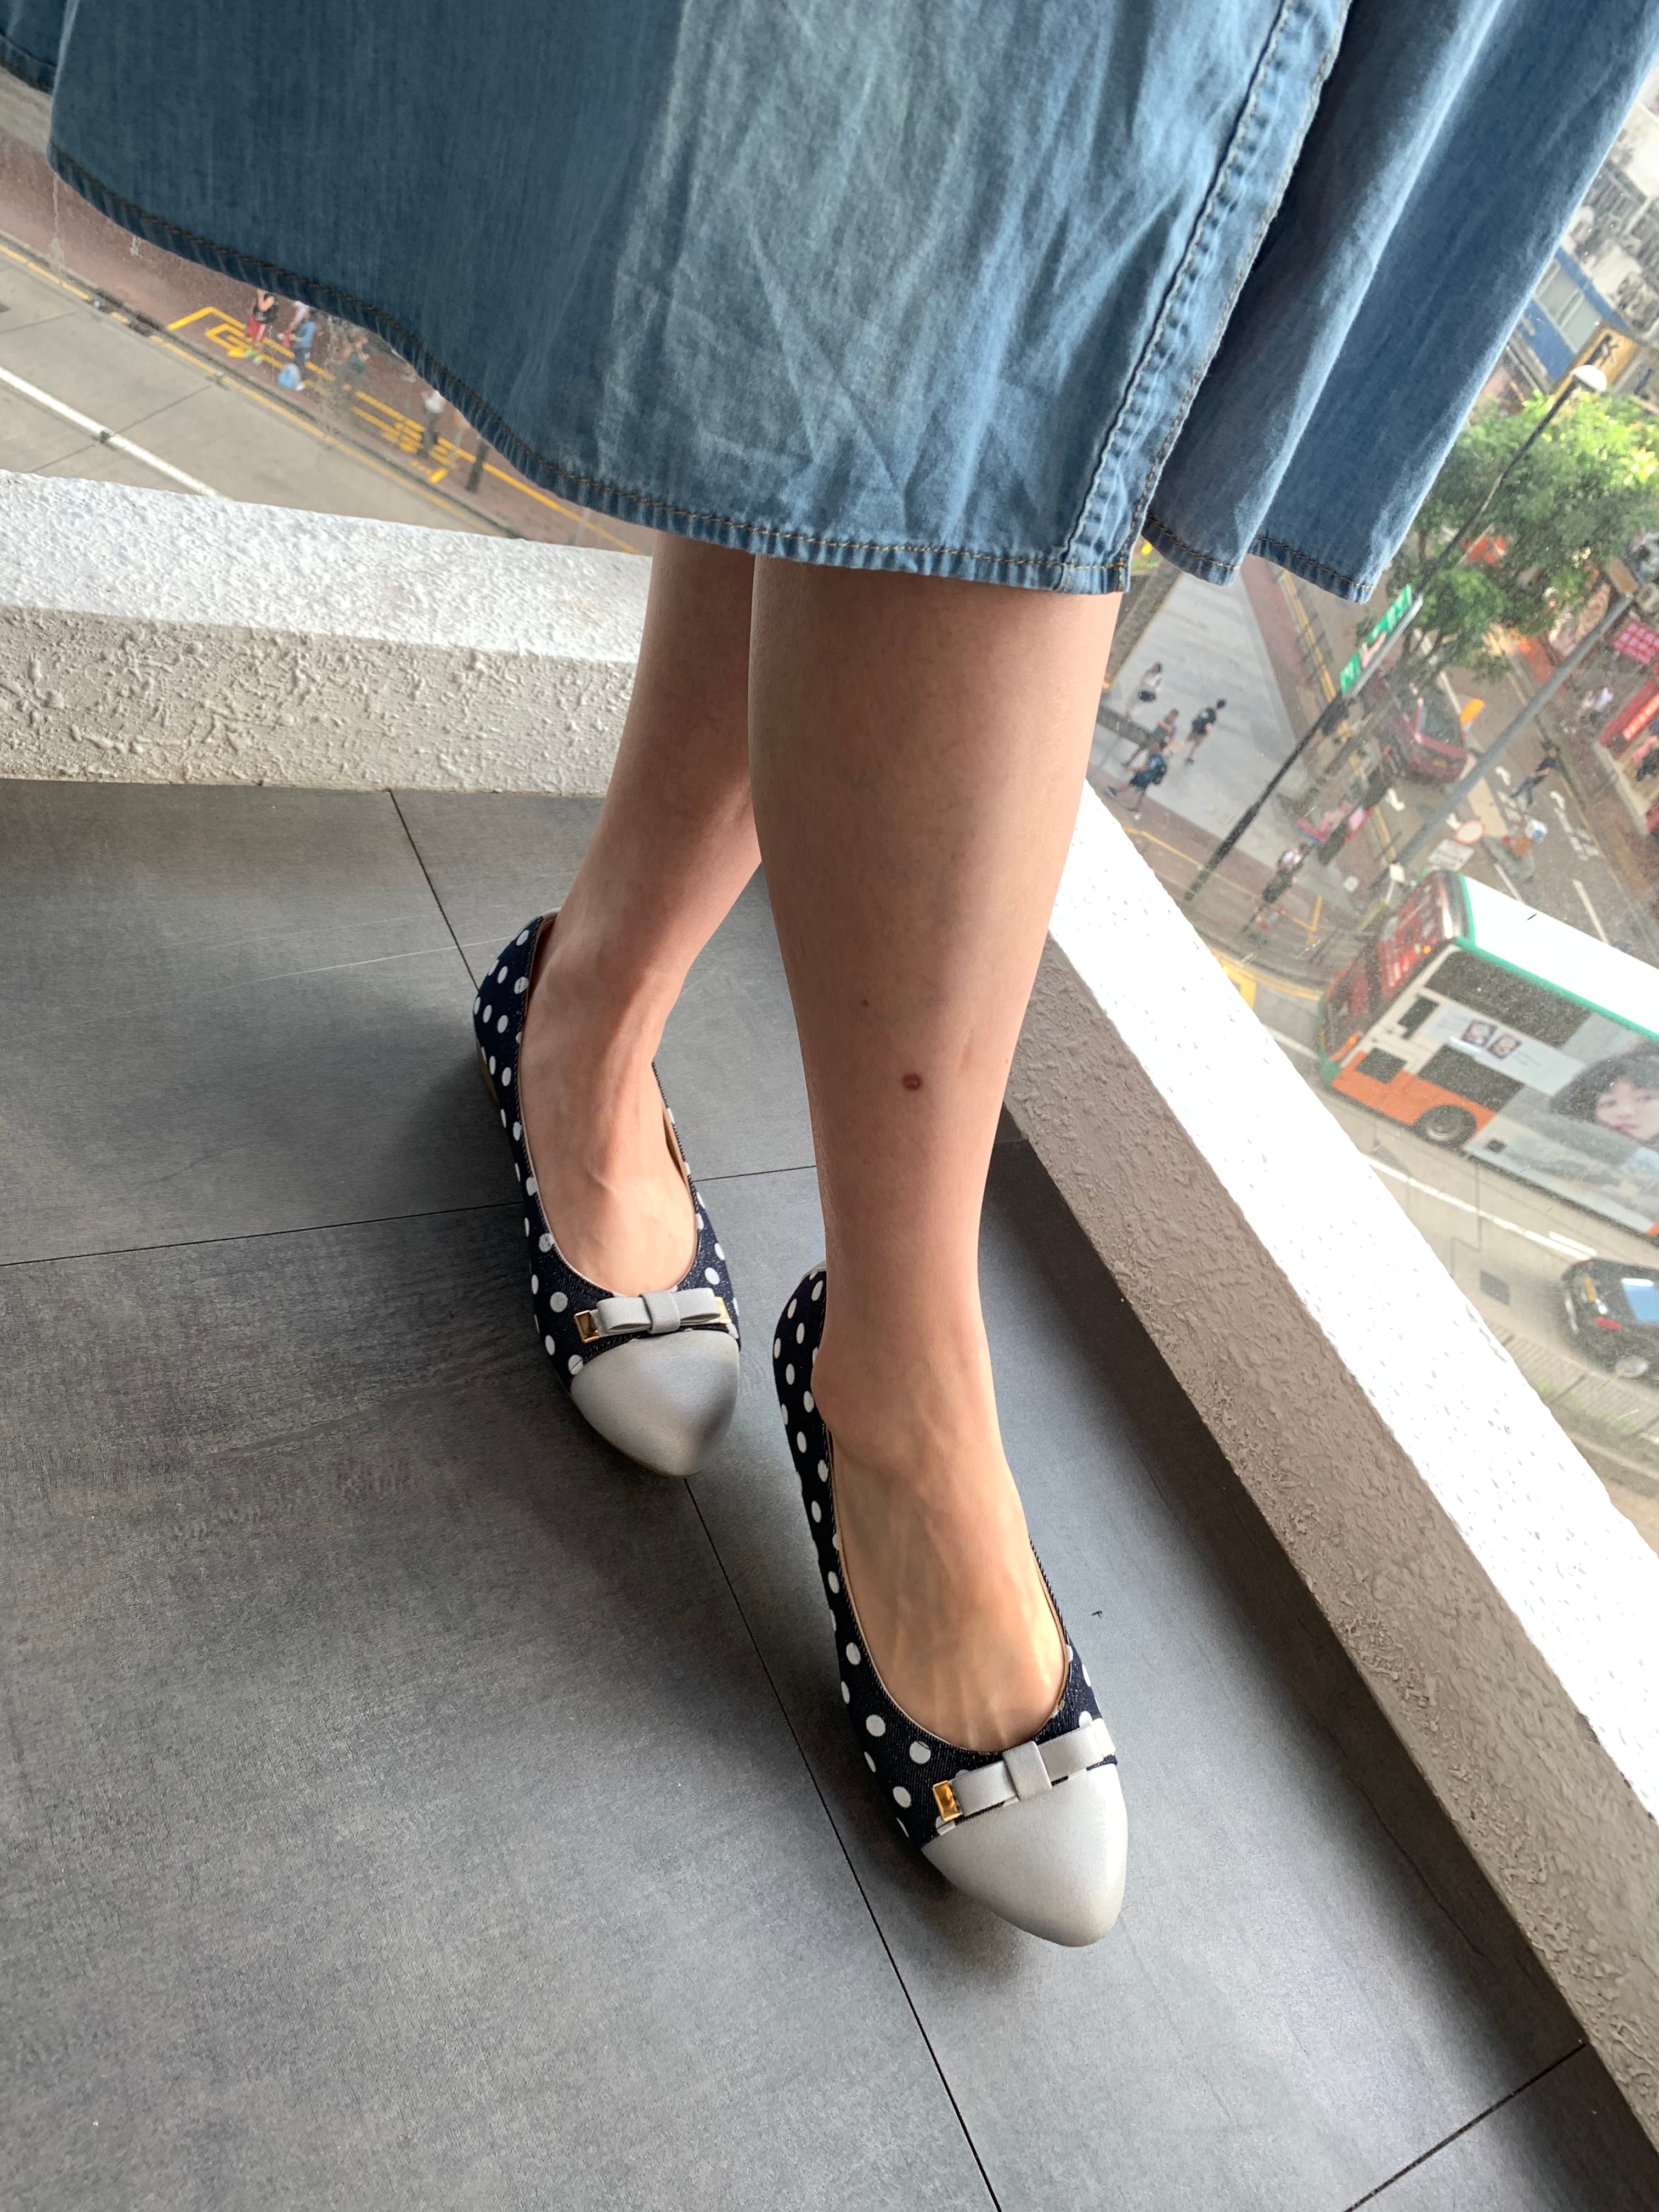 Japan Fashion Dots Pattern Flats with Bow (Soft Soles)-ARCH CONTACT-BE-JP/TW Size-1: 230-偉豐鞋 WELL SHOE HK-Well Shoe-偉豐鞋-偉豐網-荃灣鞋店-Functional shoes-Hong Kong Tsuen Wan Shoe Store-Tai Wan Shoe-Japan Shoe-高品質功能鞋-台灣進口鞋-日本進口鞋-High-quality shoes-鞋類配件-荃灣進口鞋-香港鞋店-優質鞋類產品-水靴-帆布鞋-廚師鞋-香港鞋品牌-Hong Kong Shoes brand-長者鞋-Hong Kong Rain Boots-Kitchen shoes-Cruthes-Slipper-Well Shoe Hong Kong-Anello-Arriba-休閒鞋-舒適鞋-健康鞋-皮鞋-Healthy shoes-Leather shoes-Hiking shoes